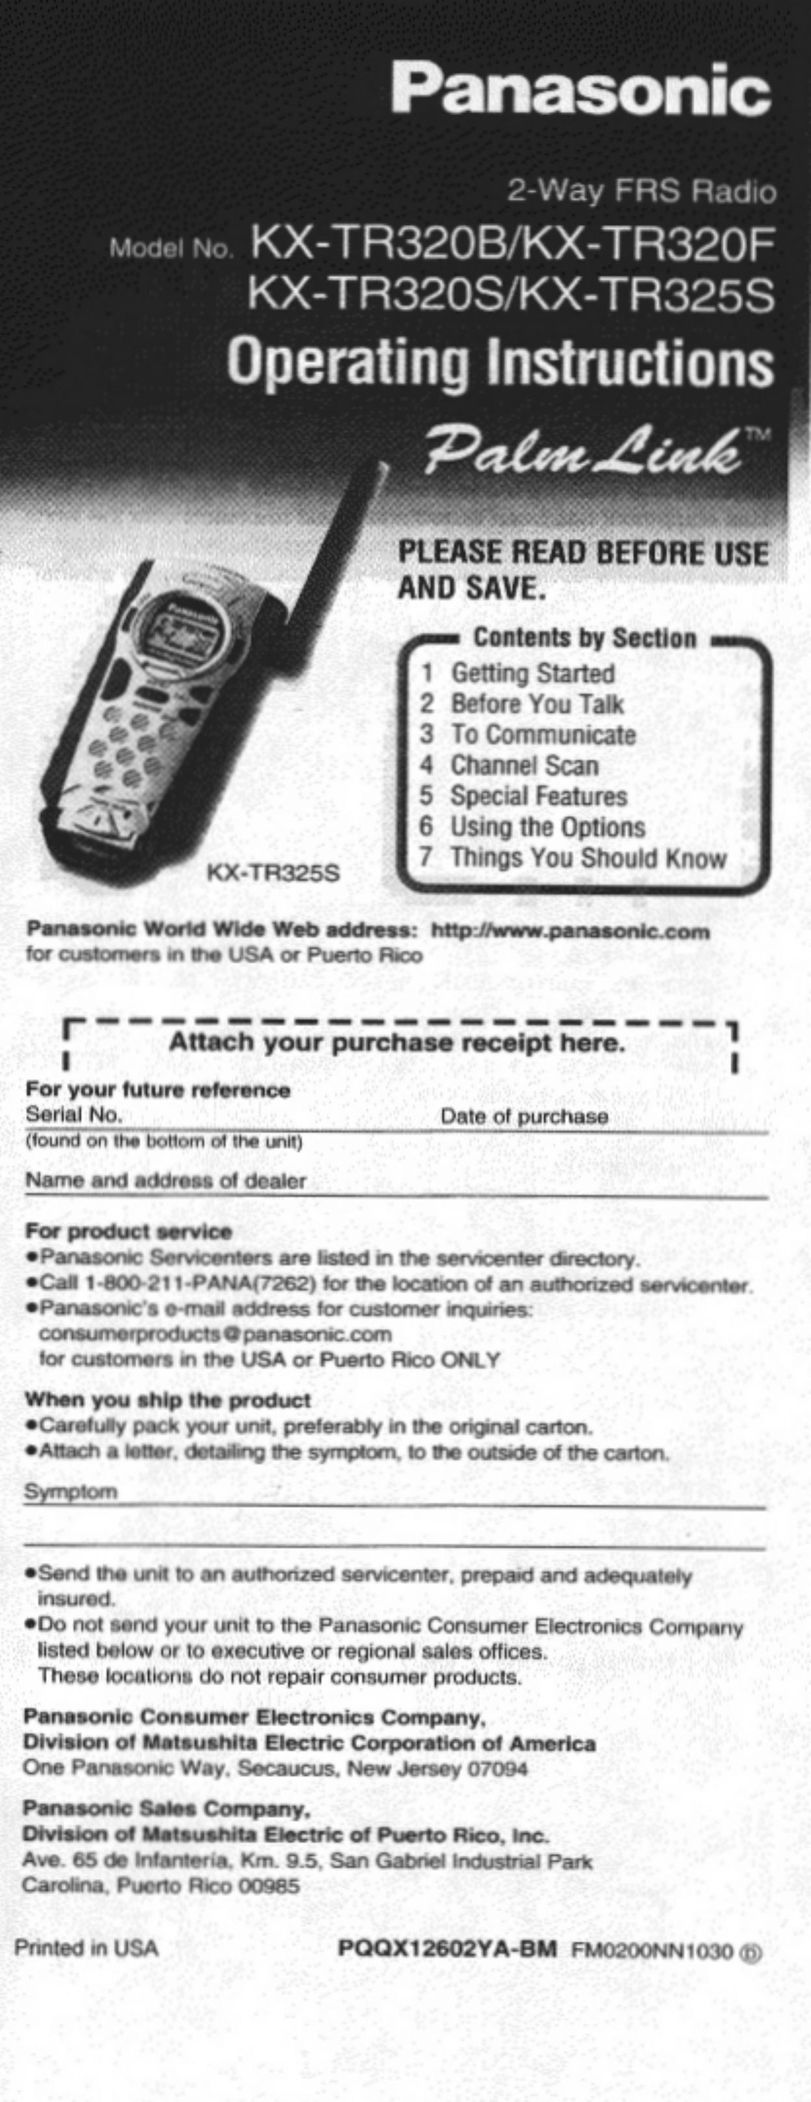 Panasonic KX-TR320F Radio User Manual